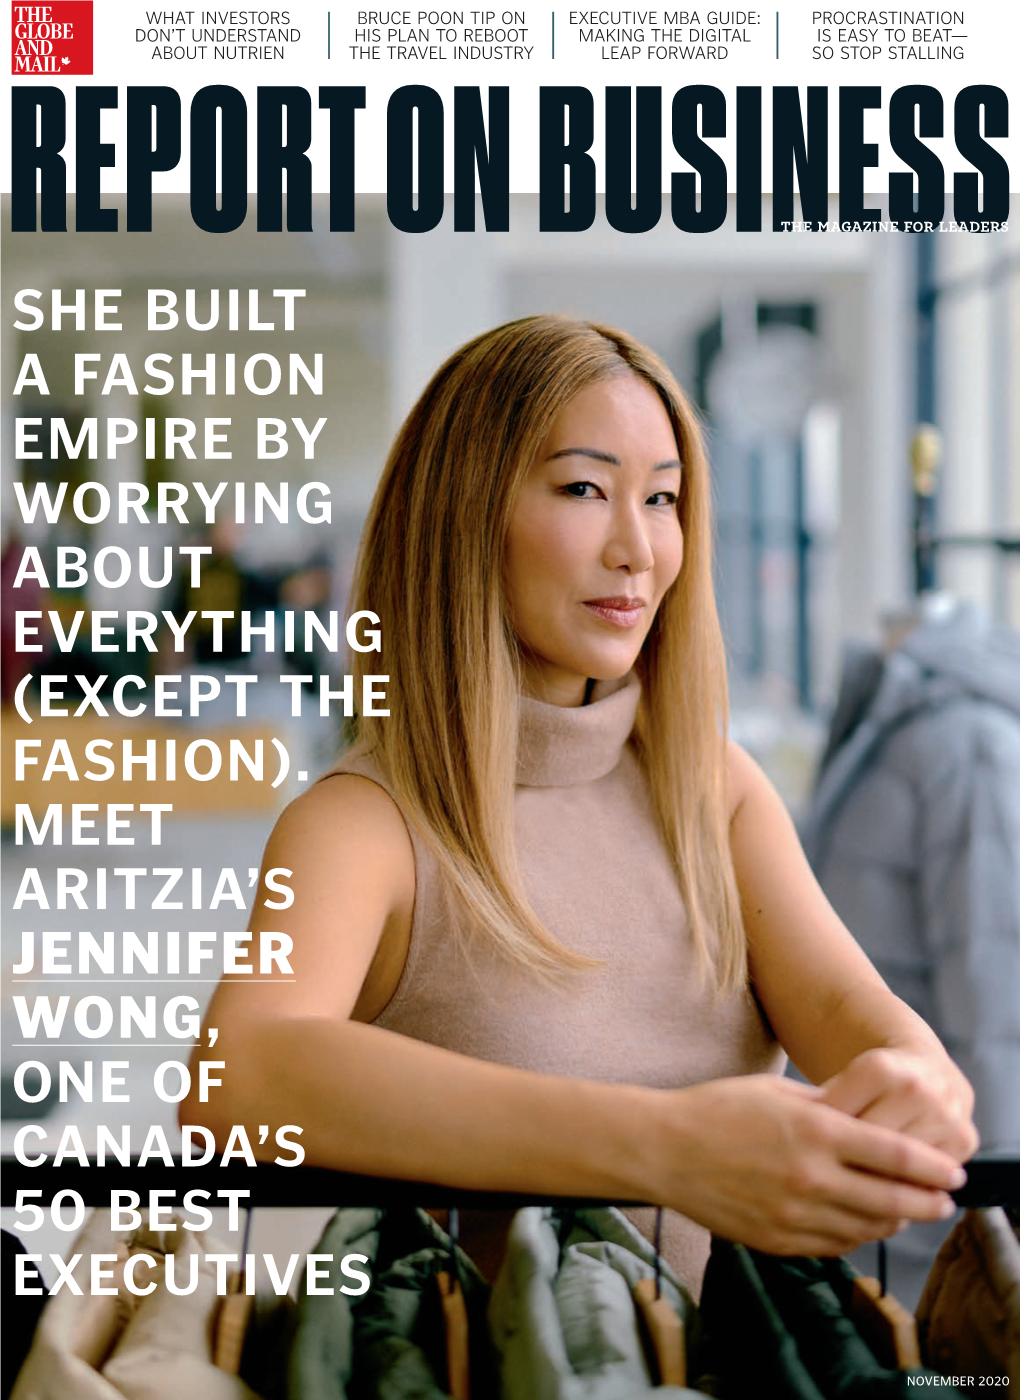 Meet Aritzia's Jennifer Wong, One of Canada